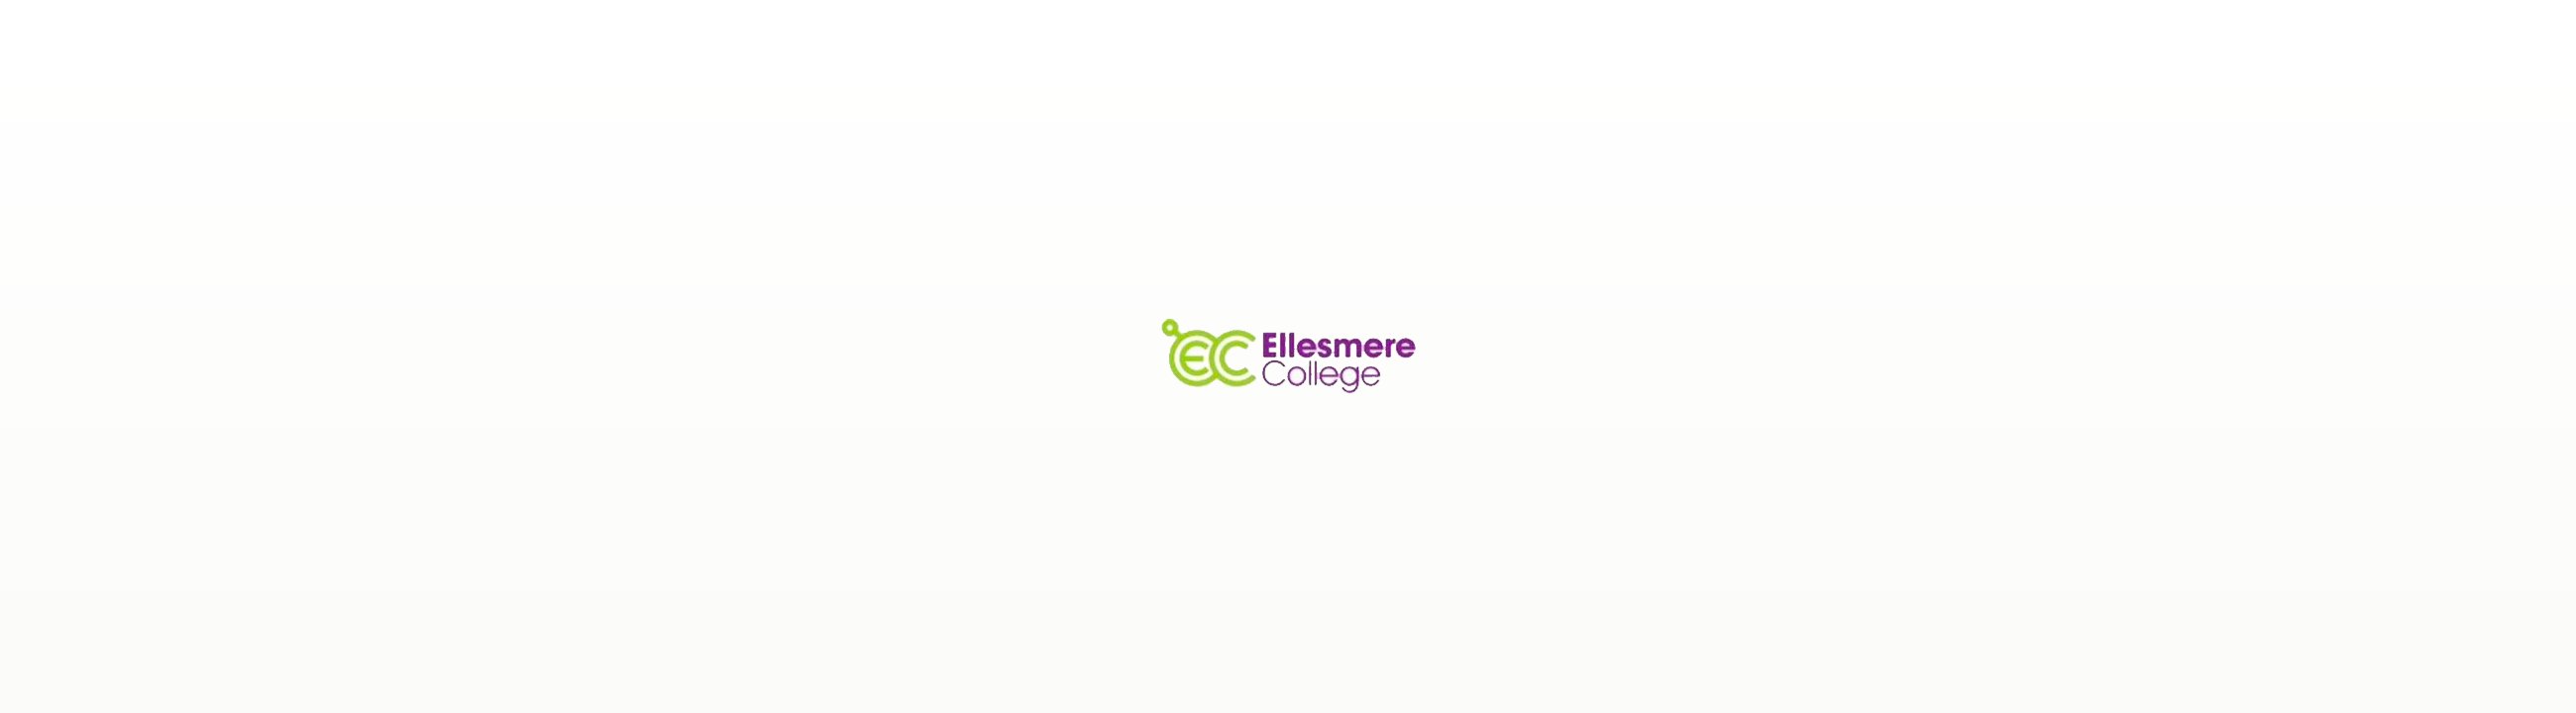 Ellesmere College